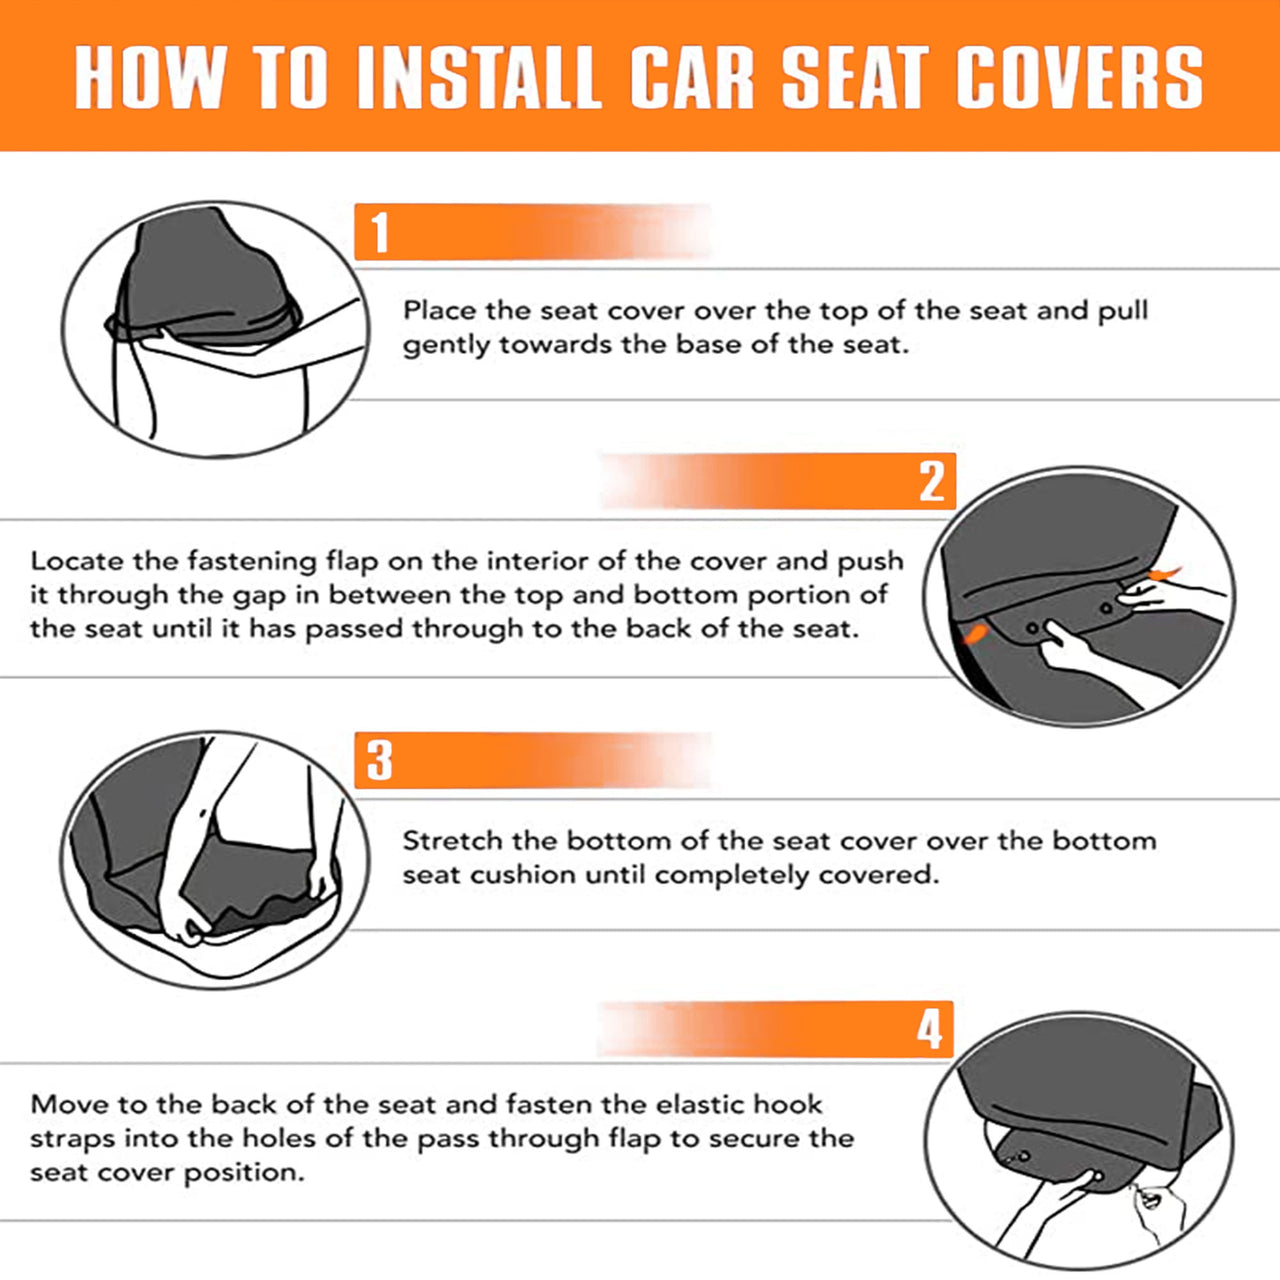 Custom Car Seat Cover Baseball Print 3D Silver Metal Seat Covers for Cars